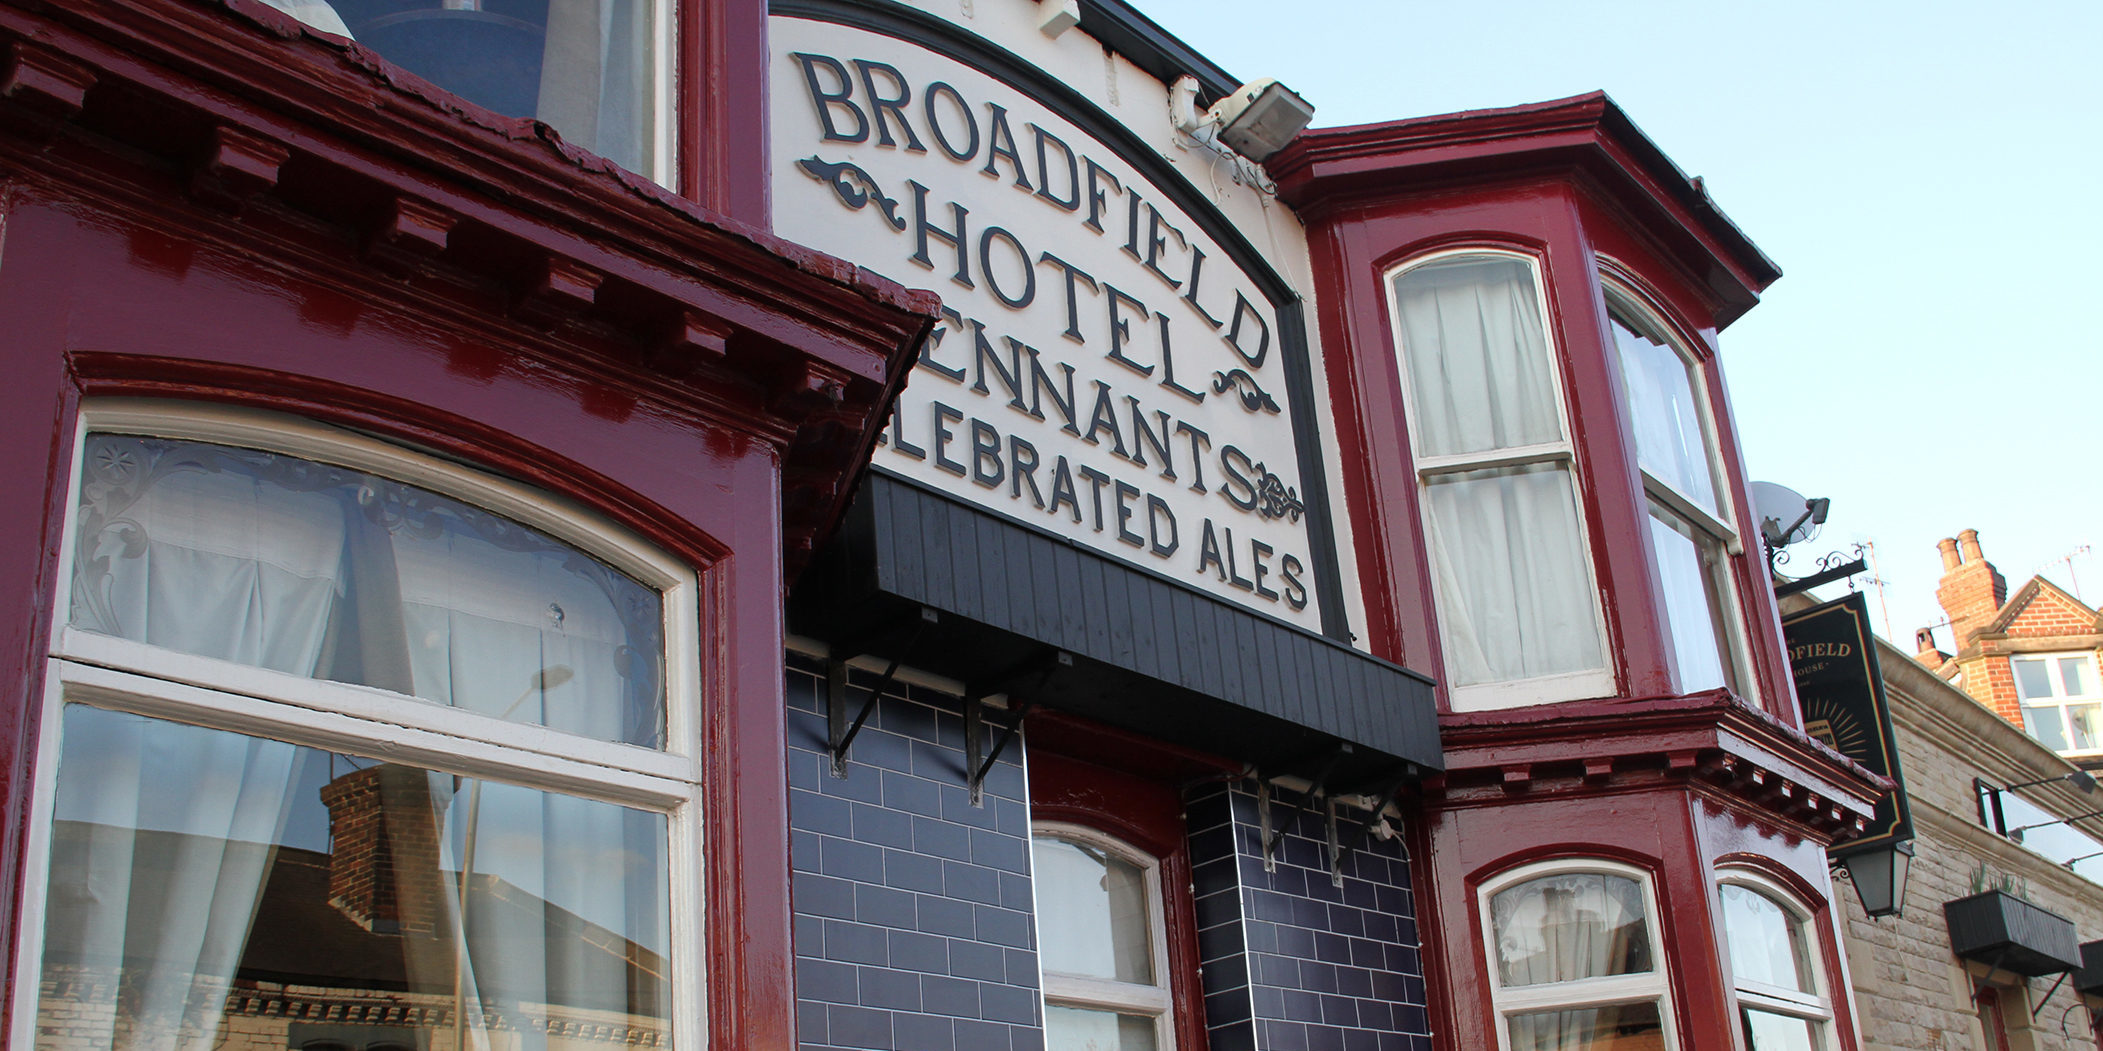 The Broadfield Ale House Sheffield